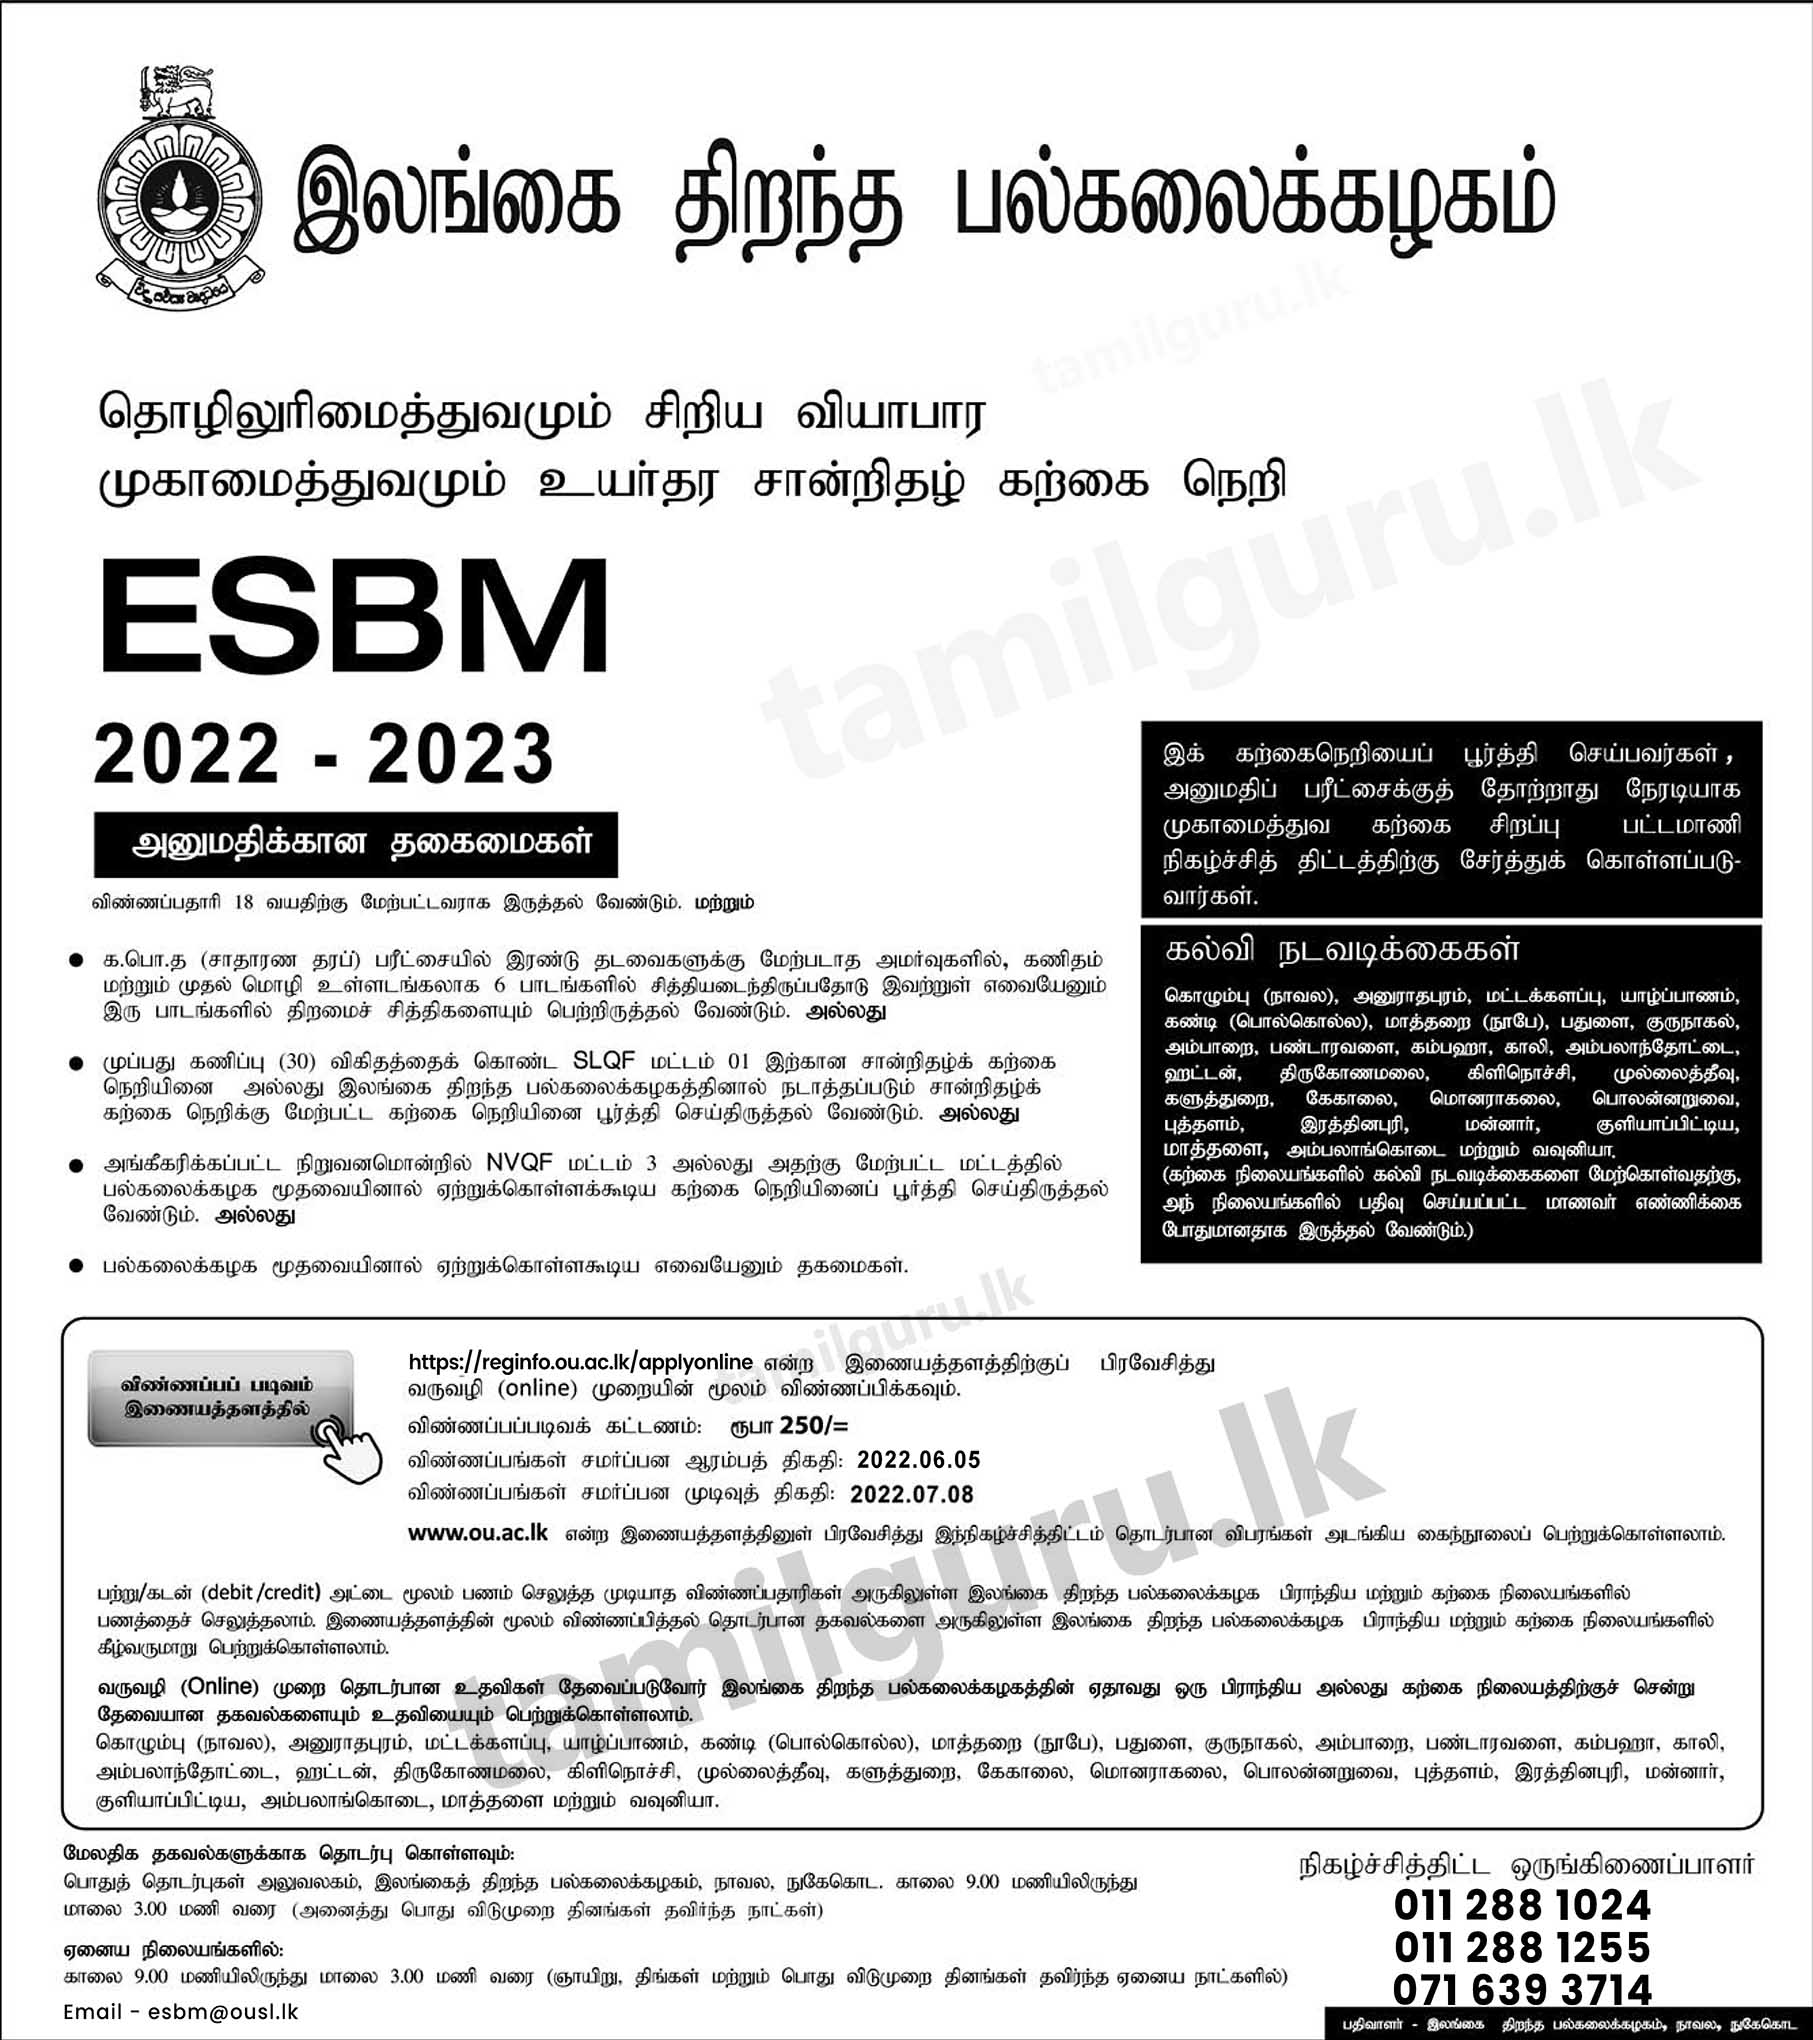 Advanced Certificate in Entrepreneurship and Small Business Management (ESBM) Course 2022/2023 - Open University of Sri Lanka (OUSL) / தொழிலுரிமைத்துவமும் சிறிய வியாபார முகாமைத்துவமும் உயர் சான்றிதழ் கற்கை நெறி